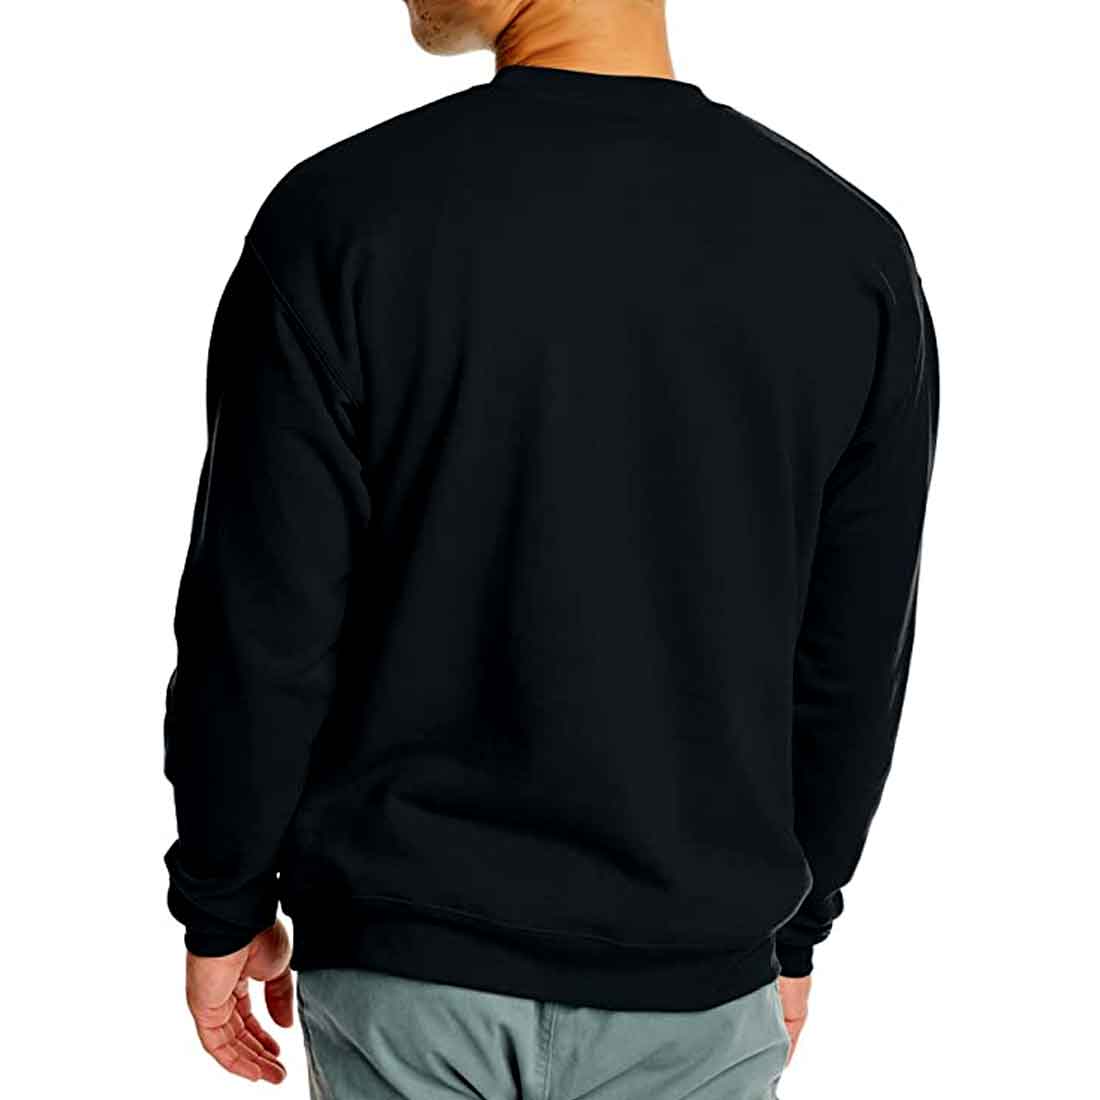 Full Sleeve Printed Men's Sweatshirt Round Neck - XOXO